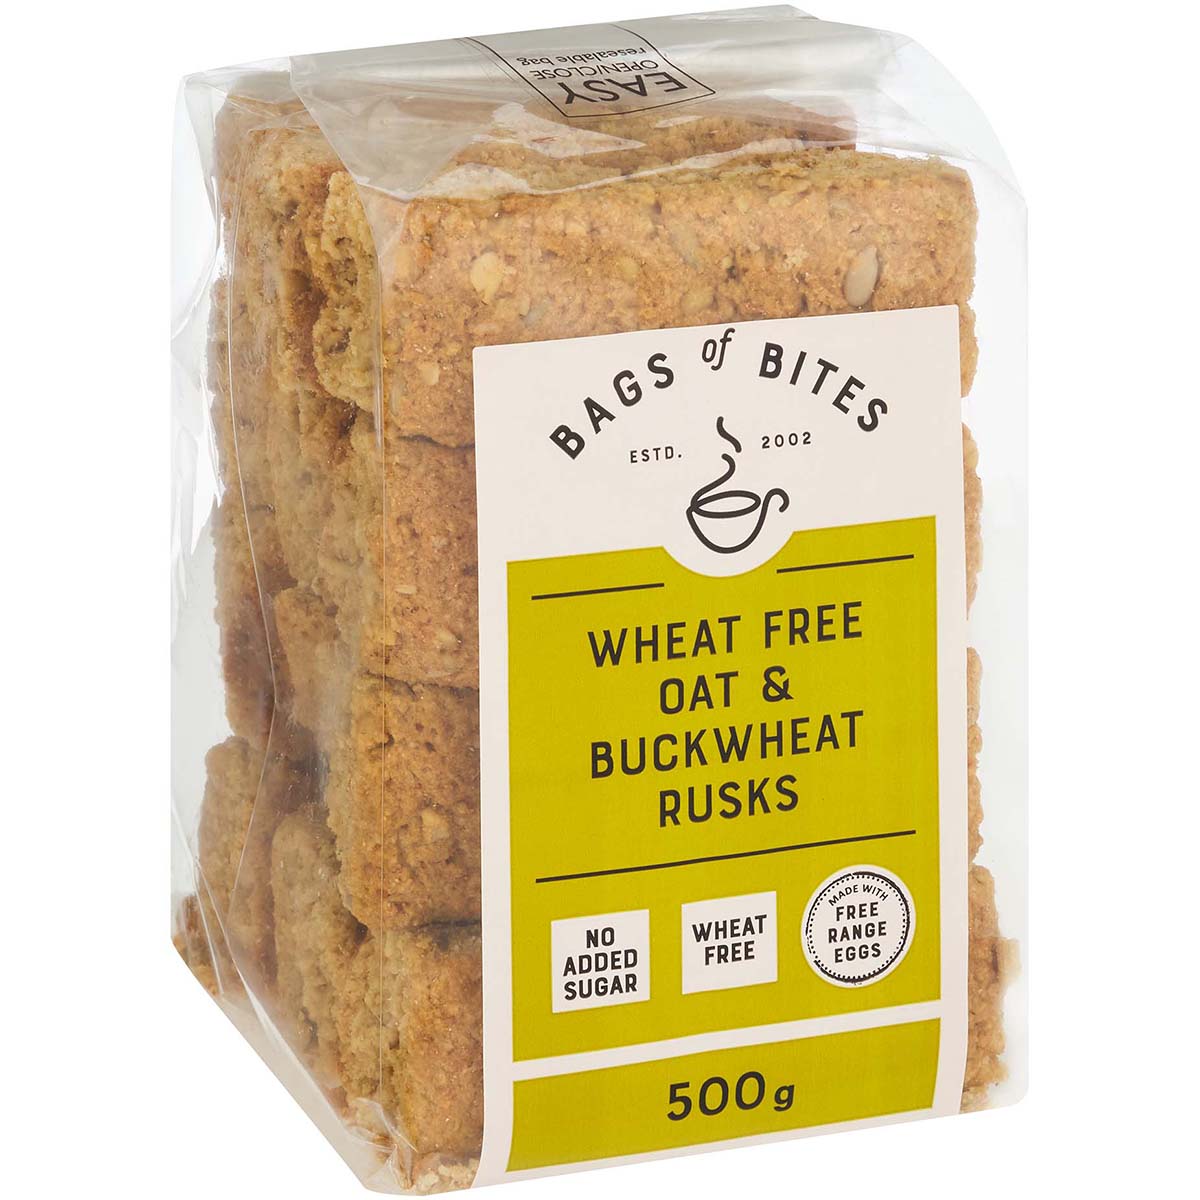 Oat & Buckwheat Rusks - No Added Sugar/Wheat Free